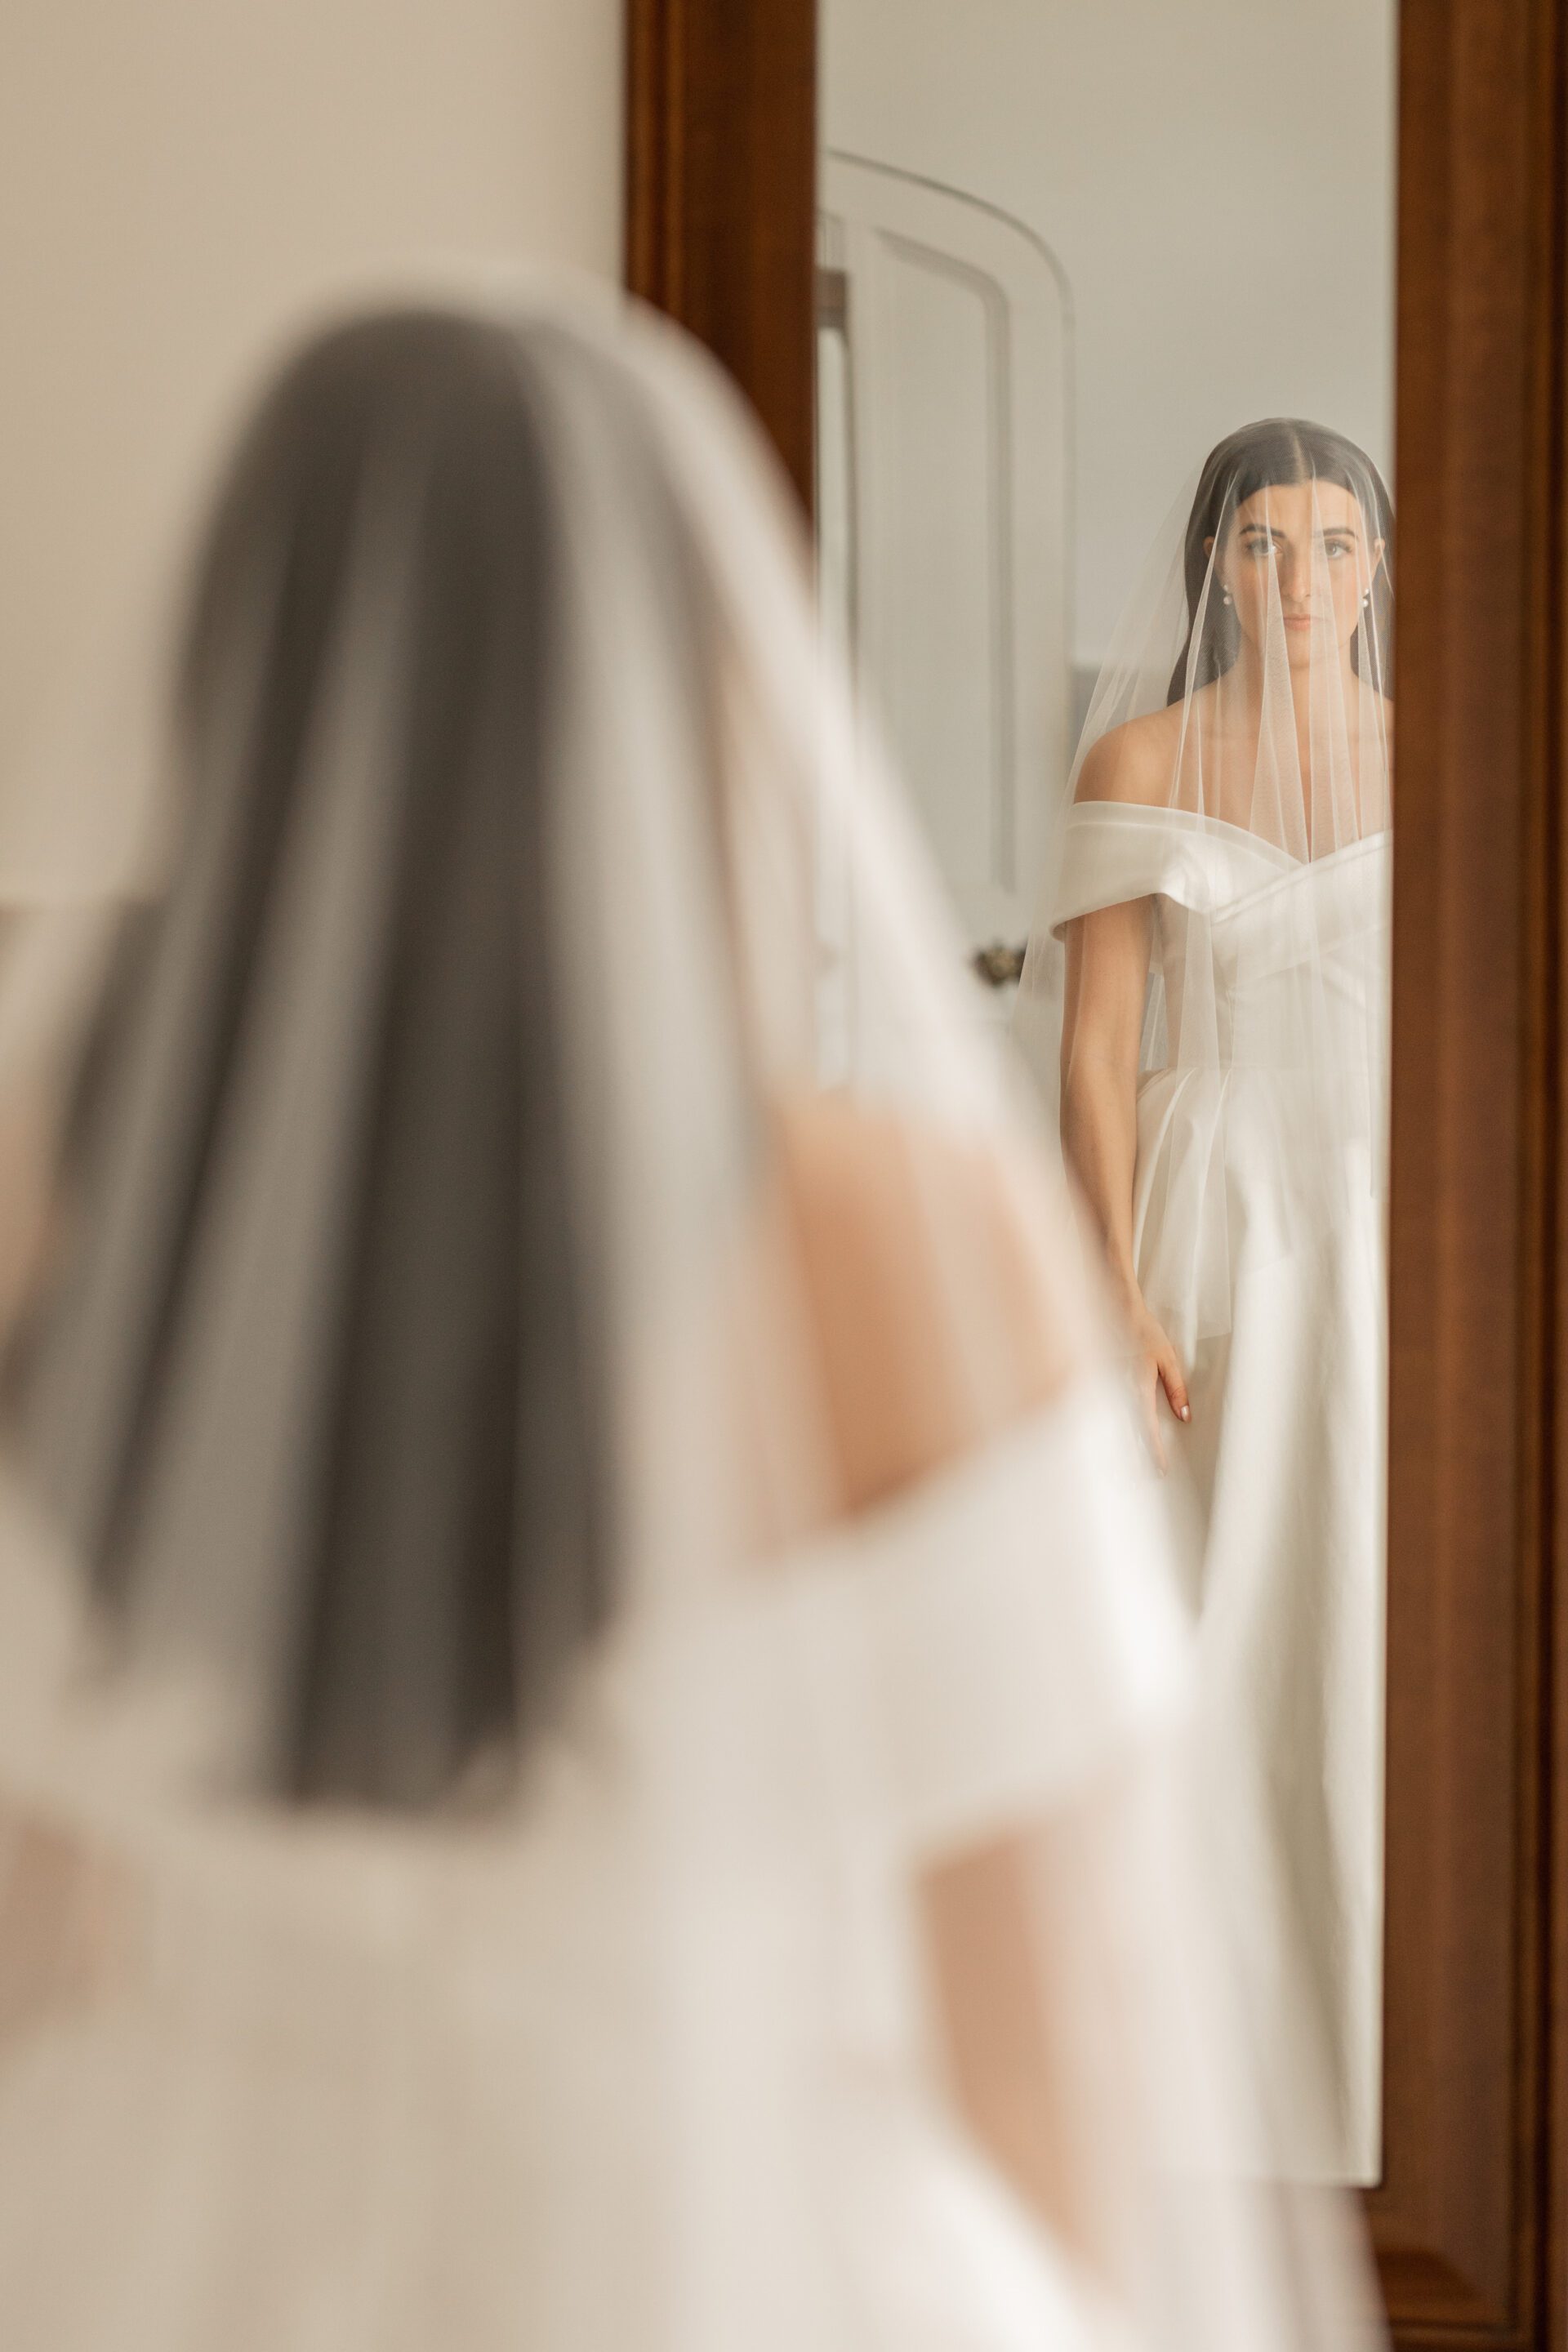 The bride surveys her reflection during bridal prep at Tortworth Court